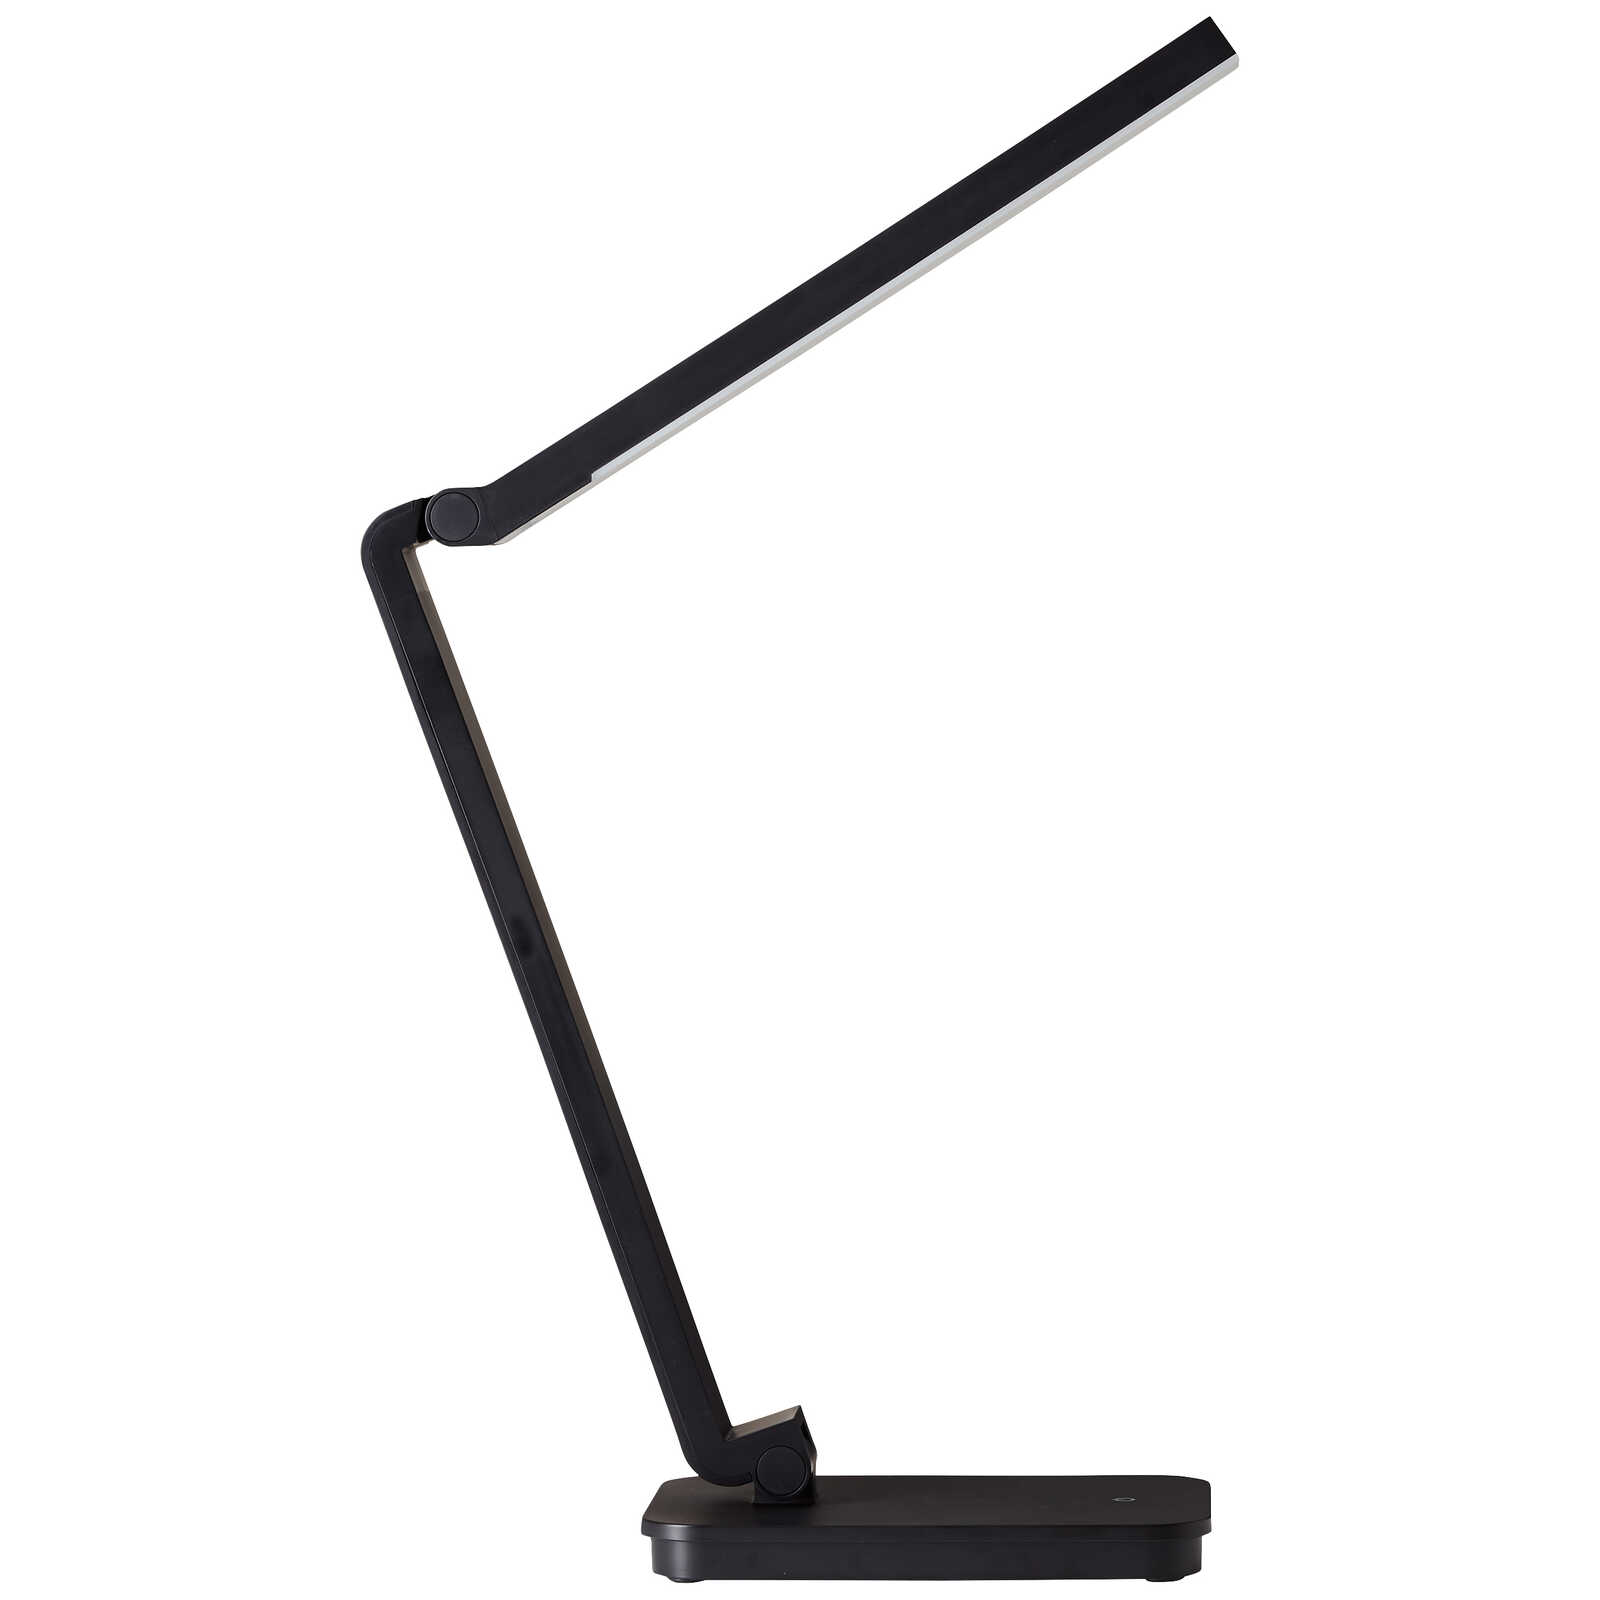             Lampe de table en plastique - Romy 2 - Noir
        